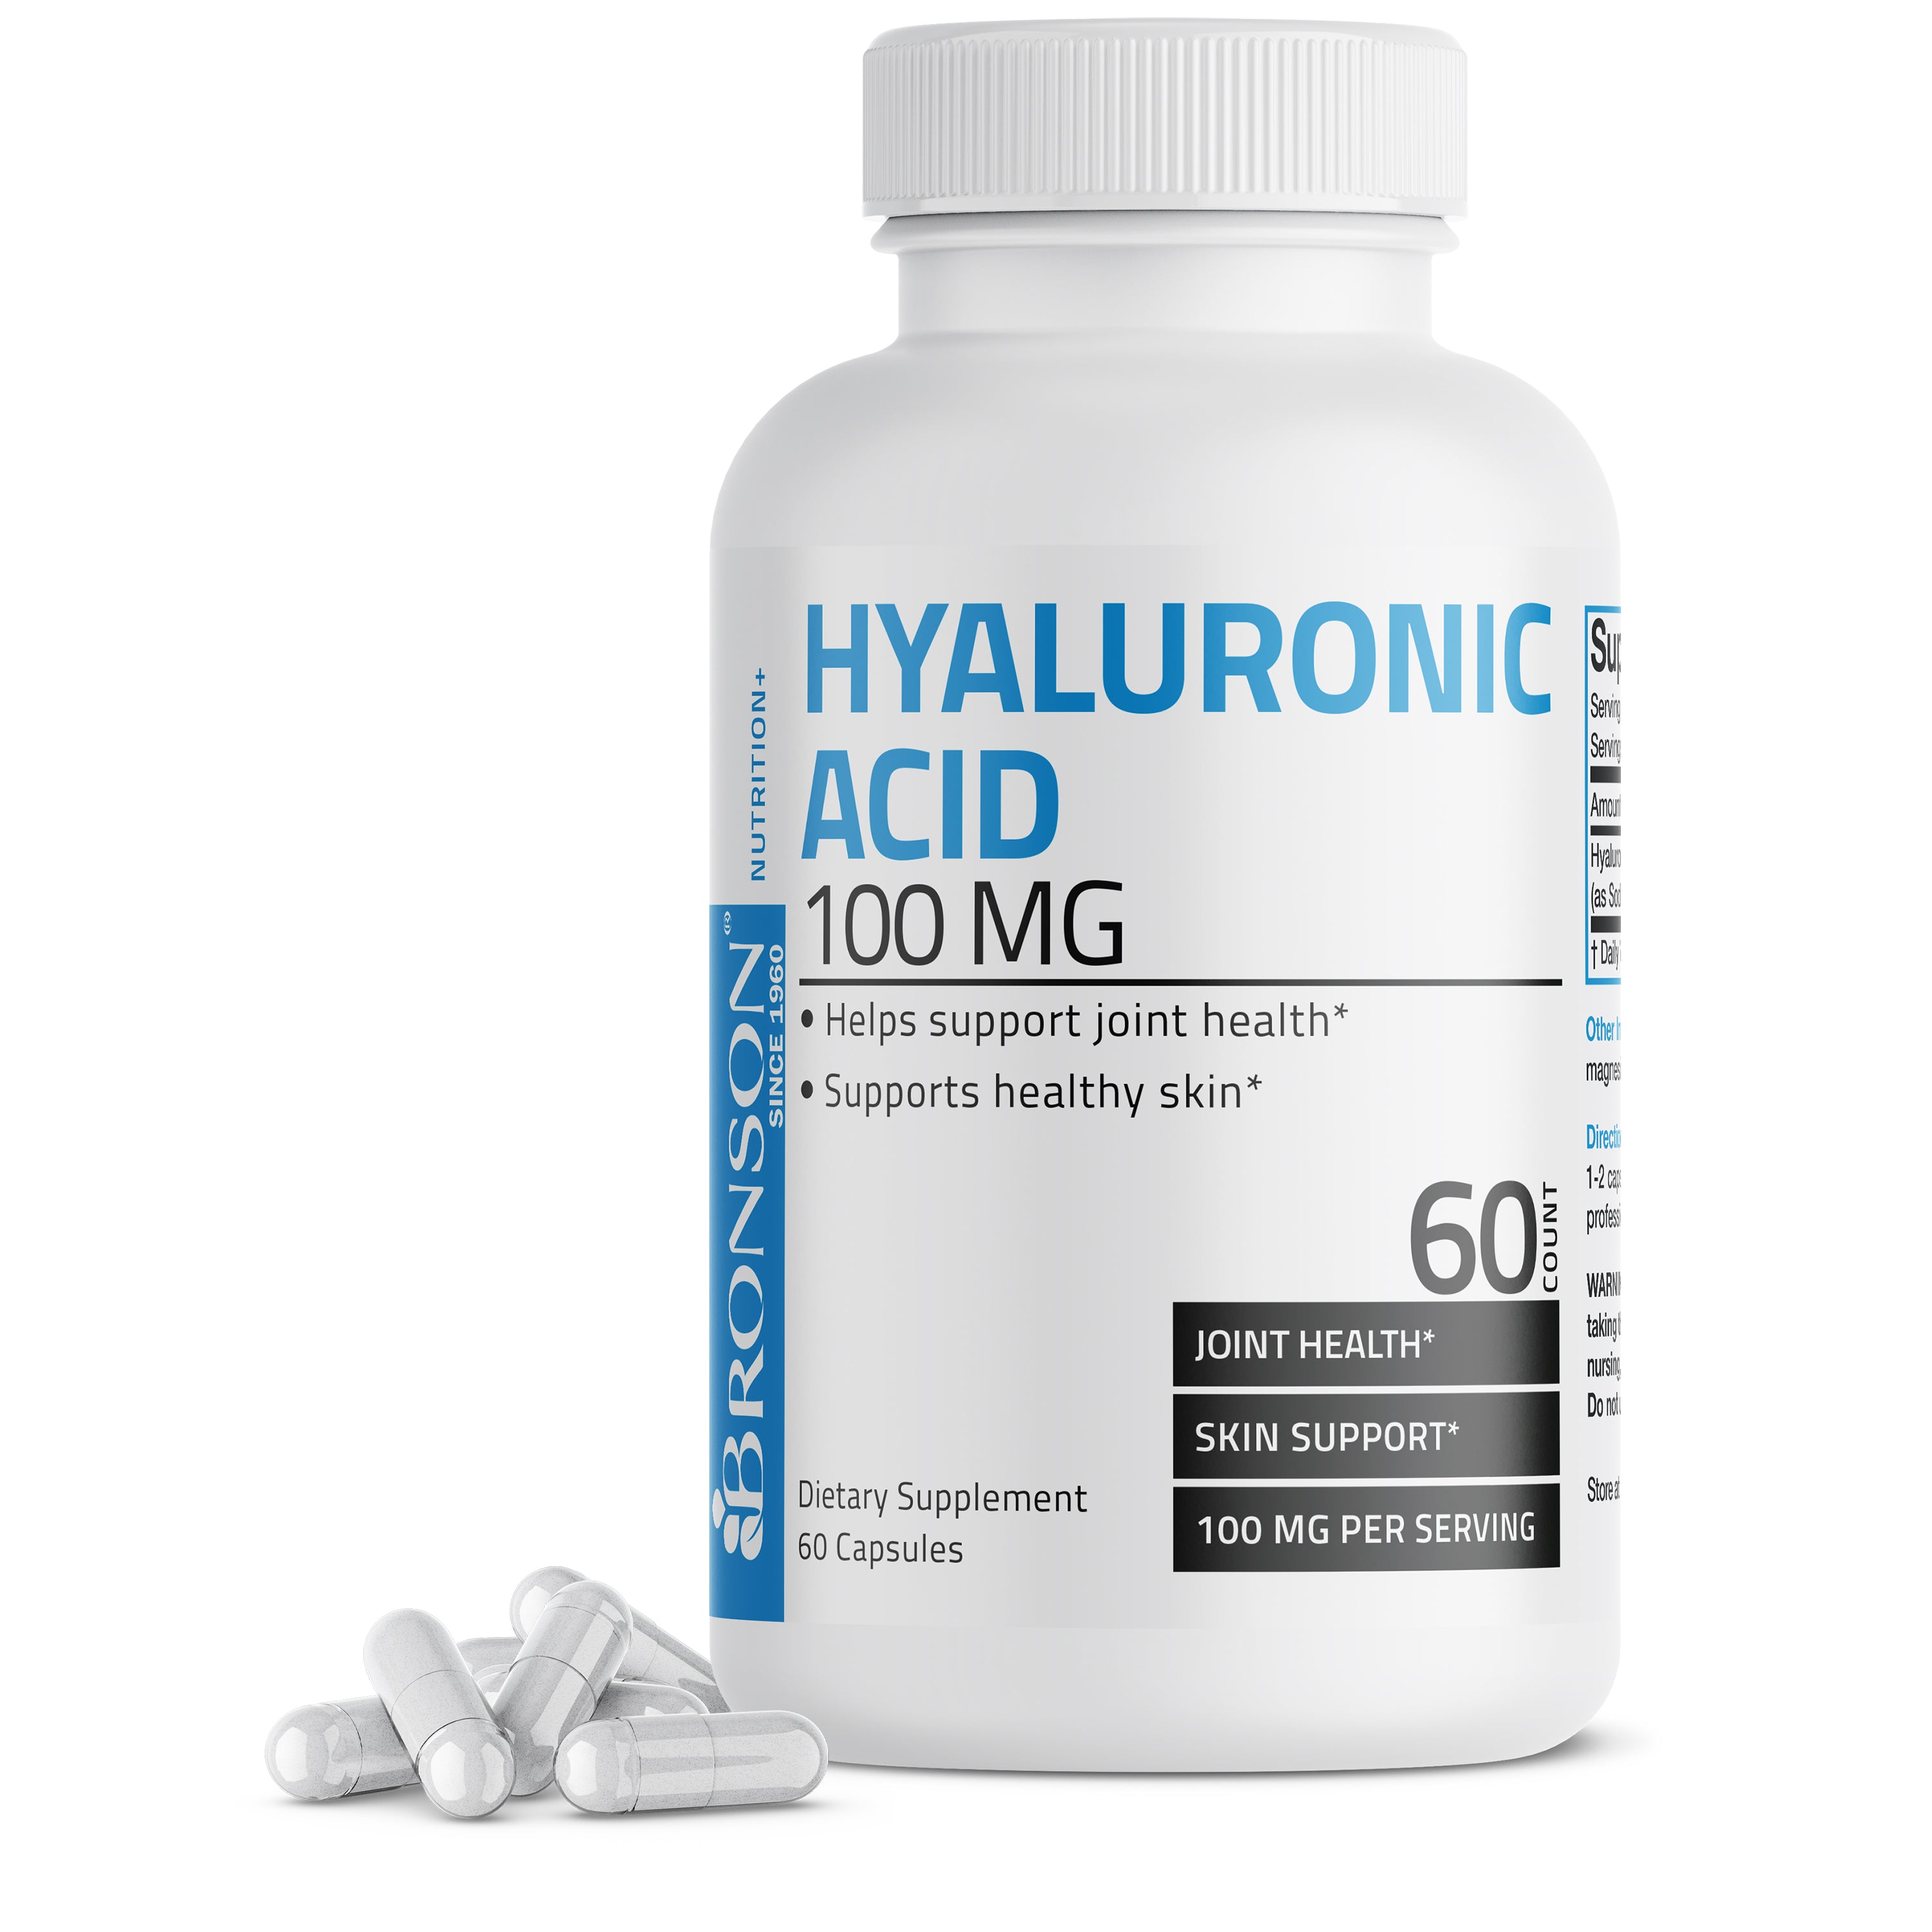 Hyaluronic Acid - 100 mg (Per 2 Capsules) view 1 of 6